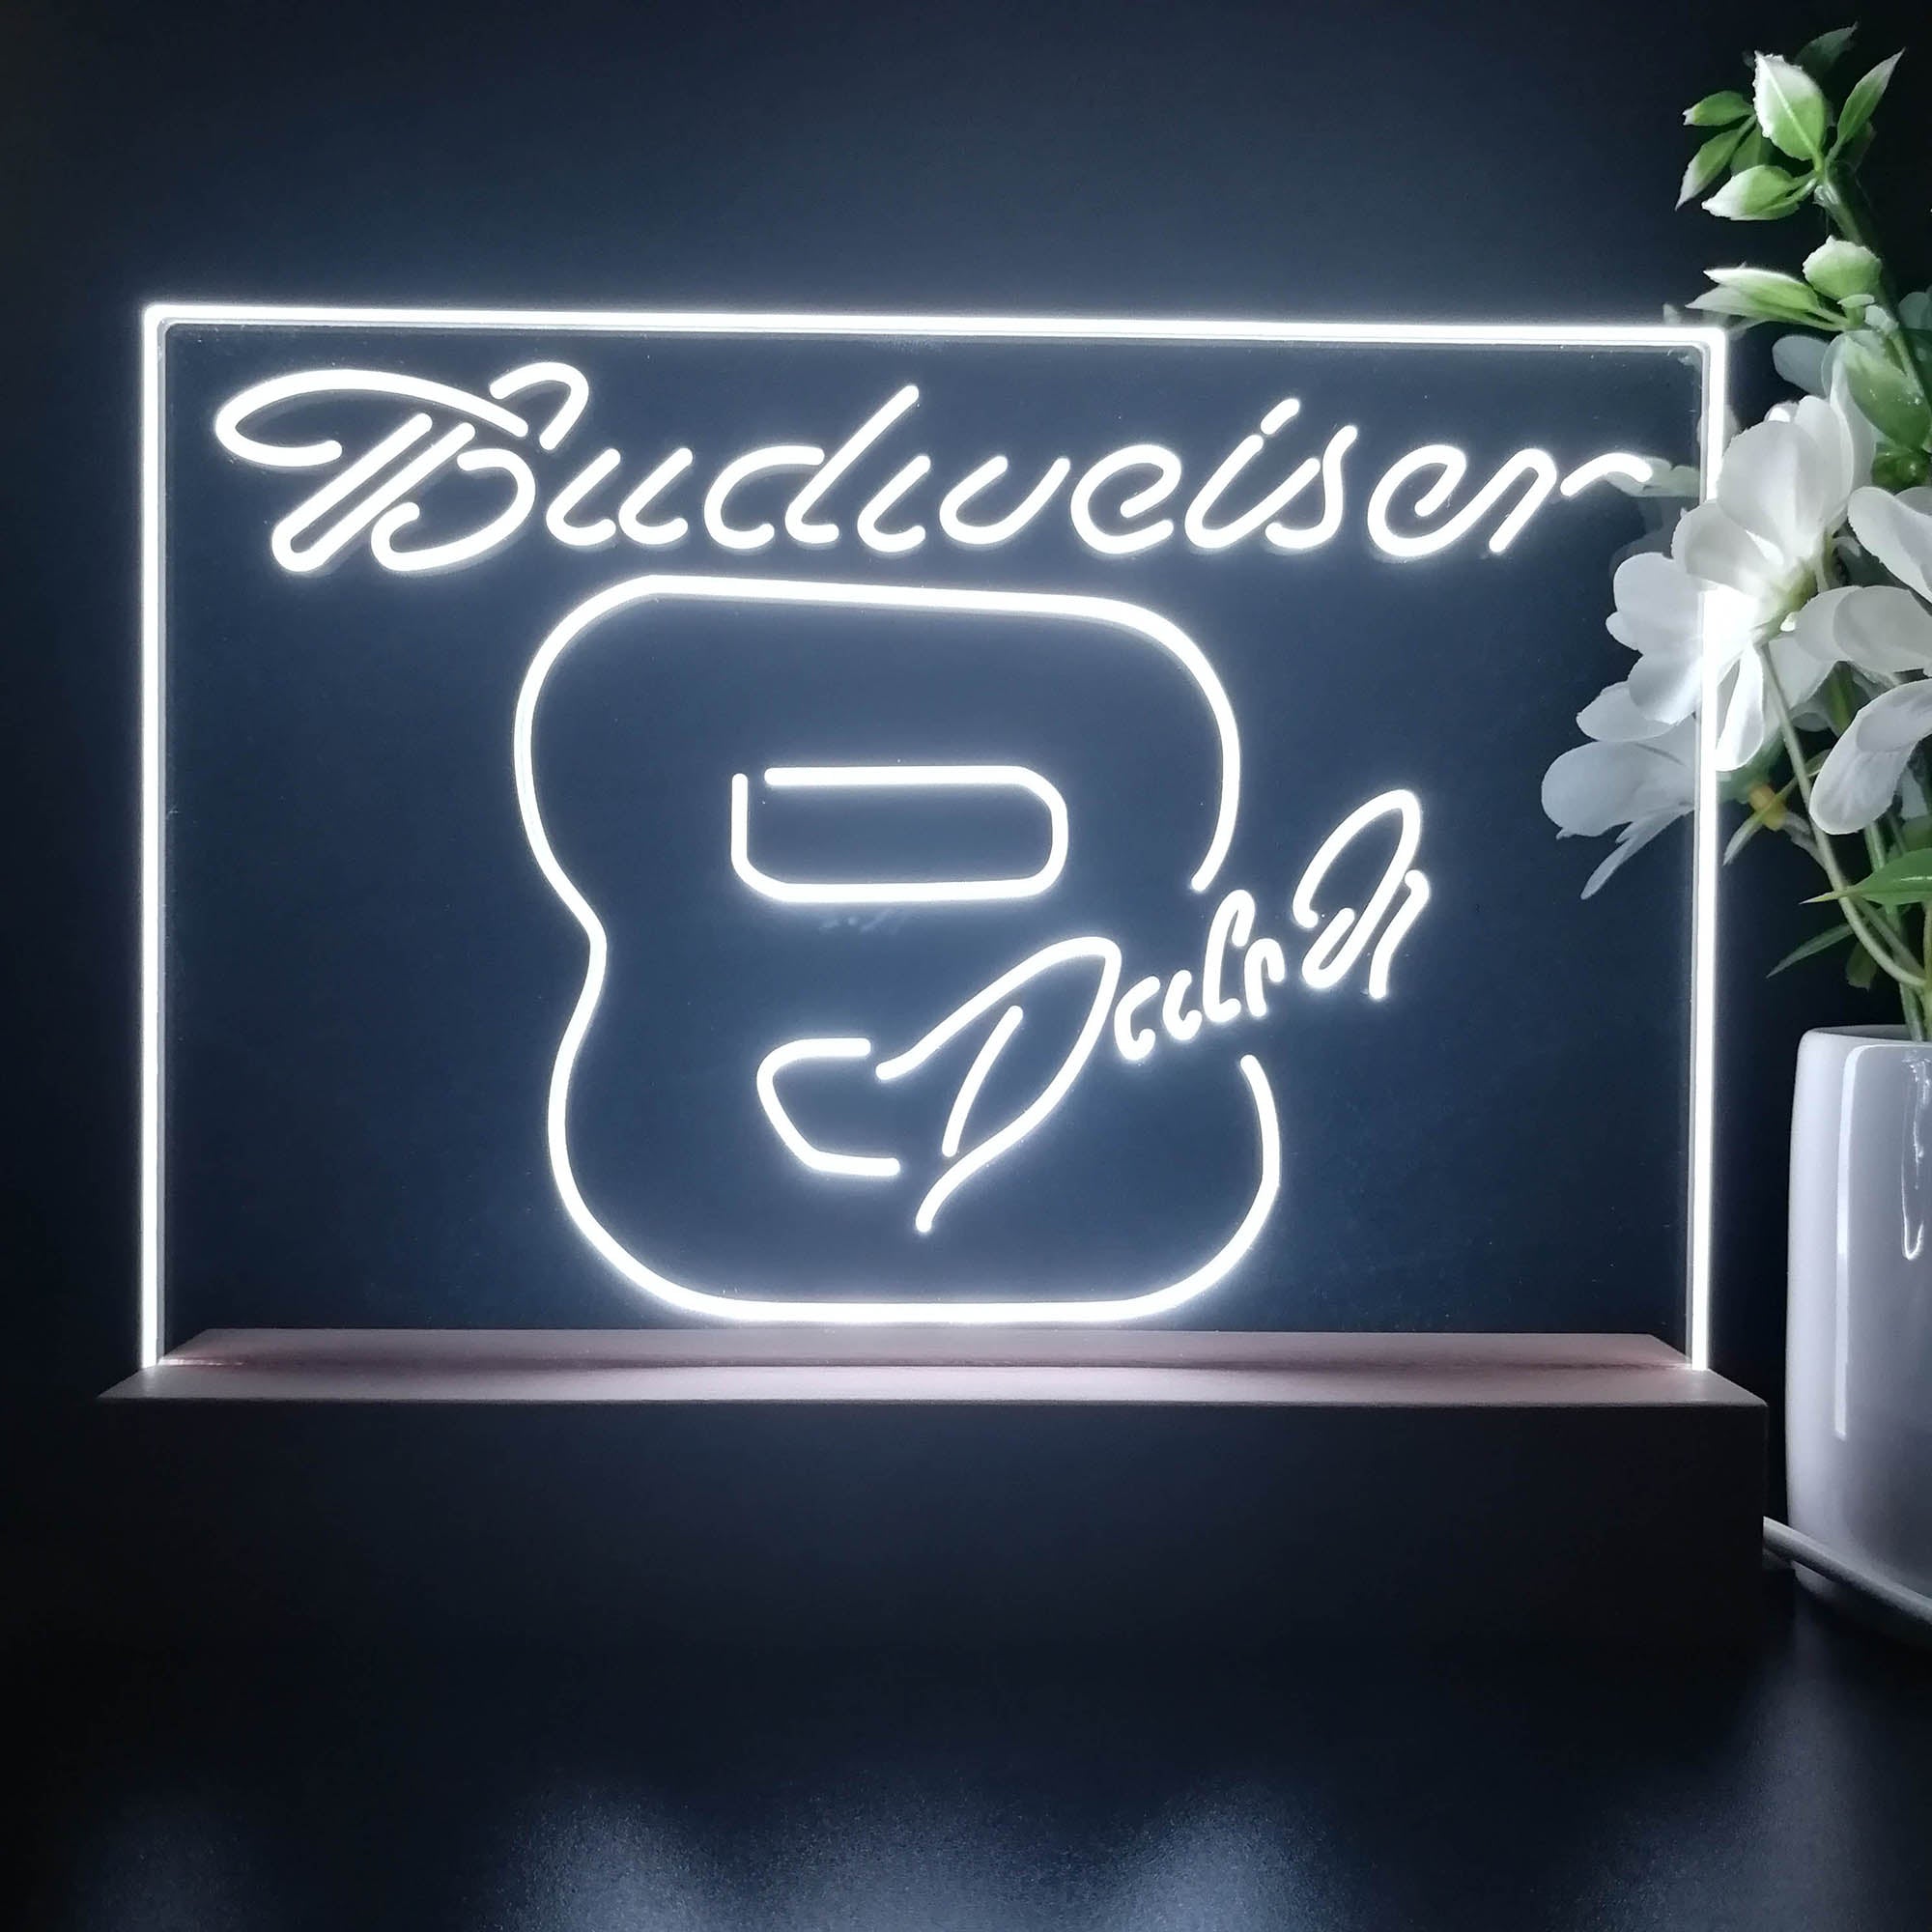 Budweiser Dale Jr. #8 Racing Car Neon Sign Pub Bar Lamp